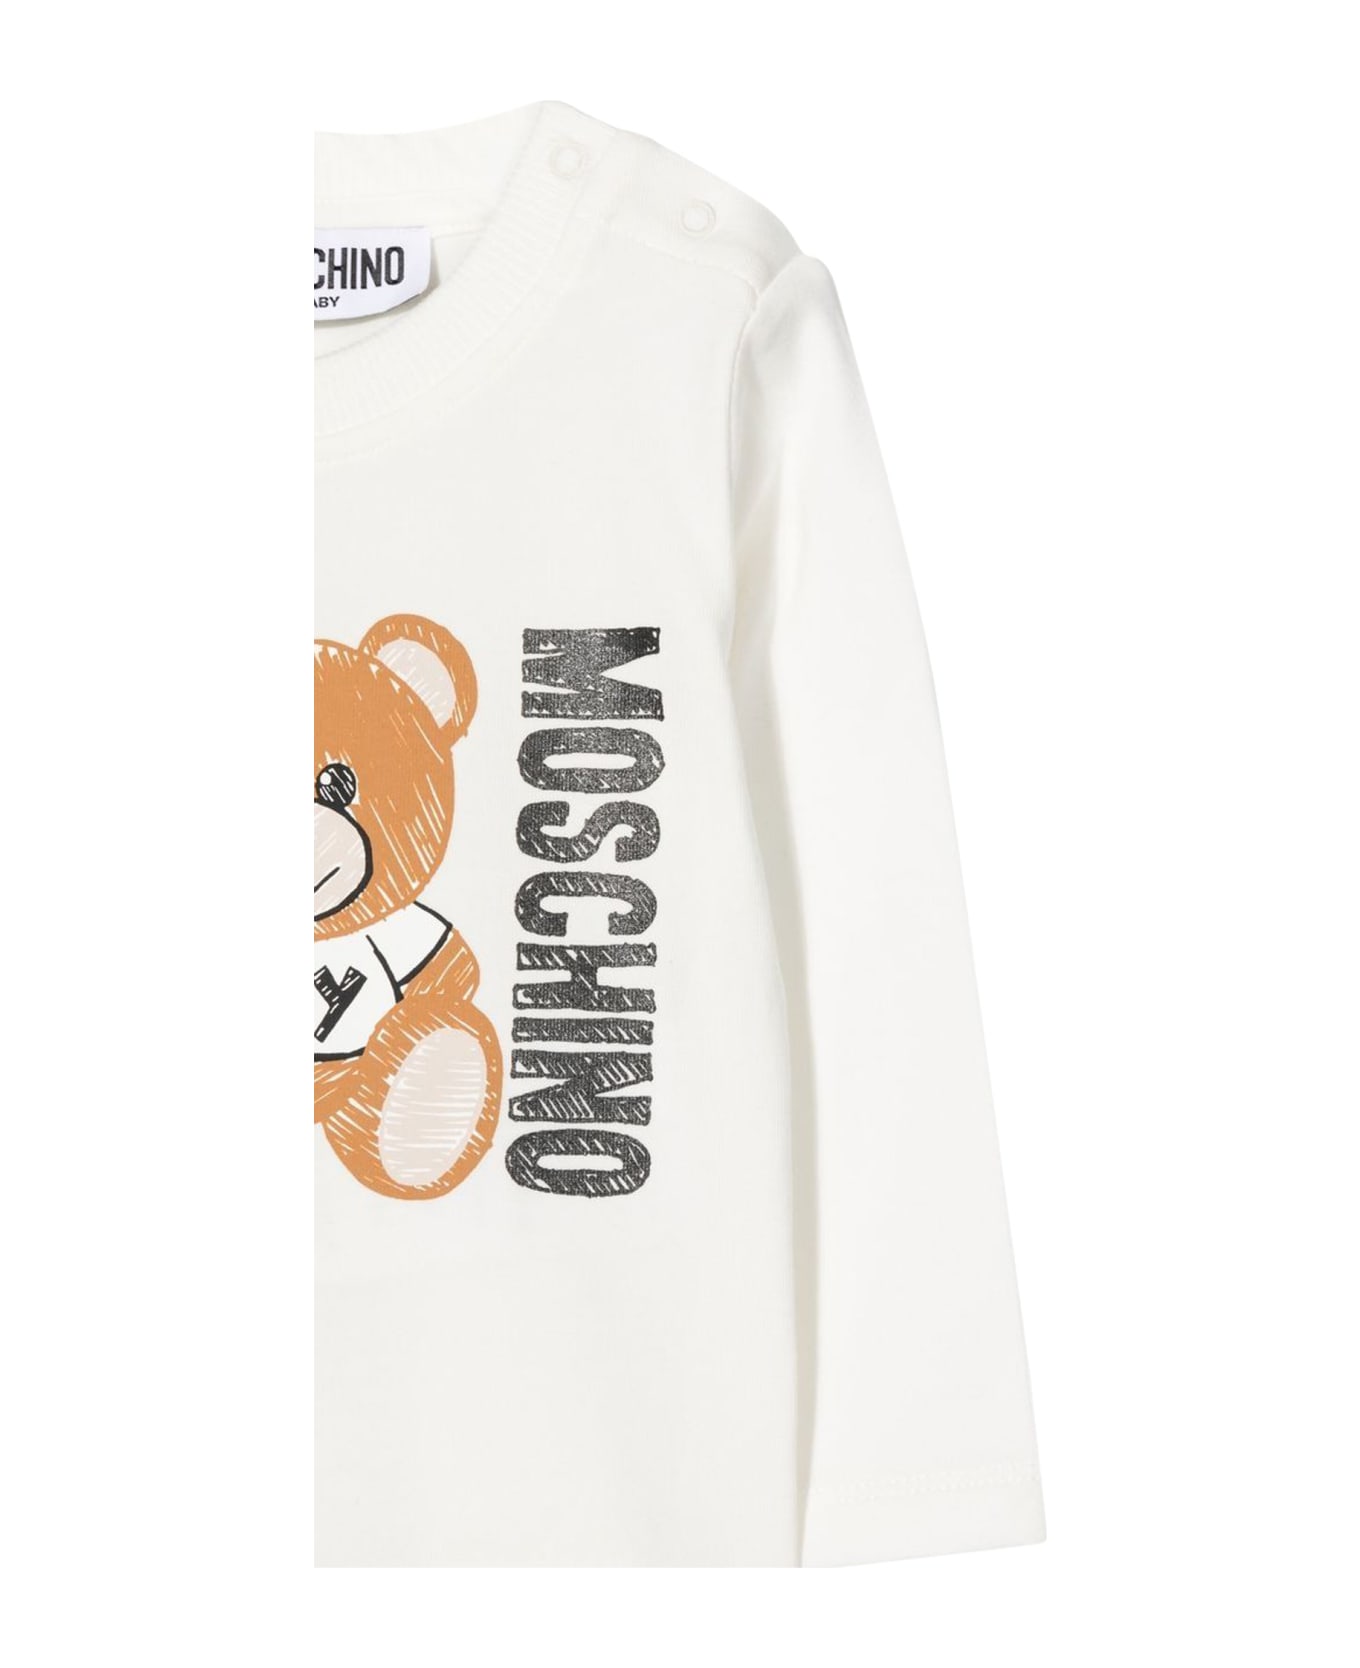 Moschino T-shirt M/l Teddy Bear Gifts - BIANCO